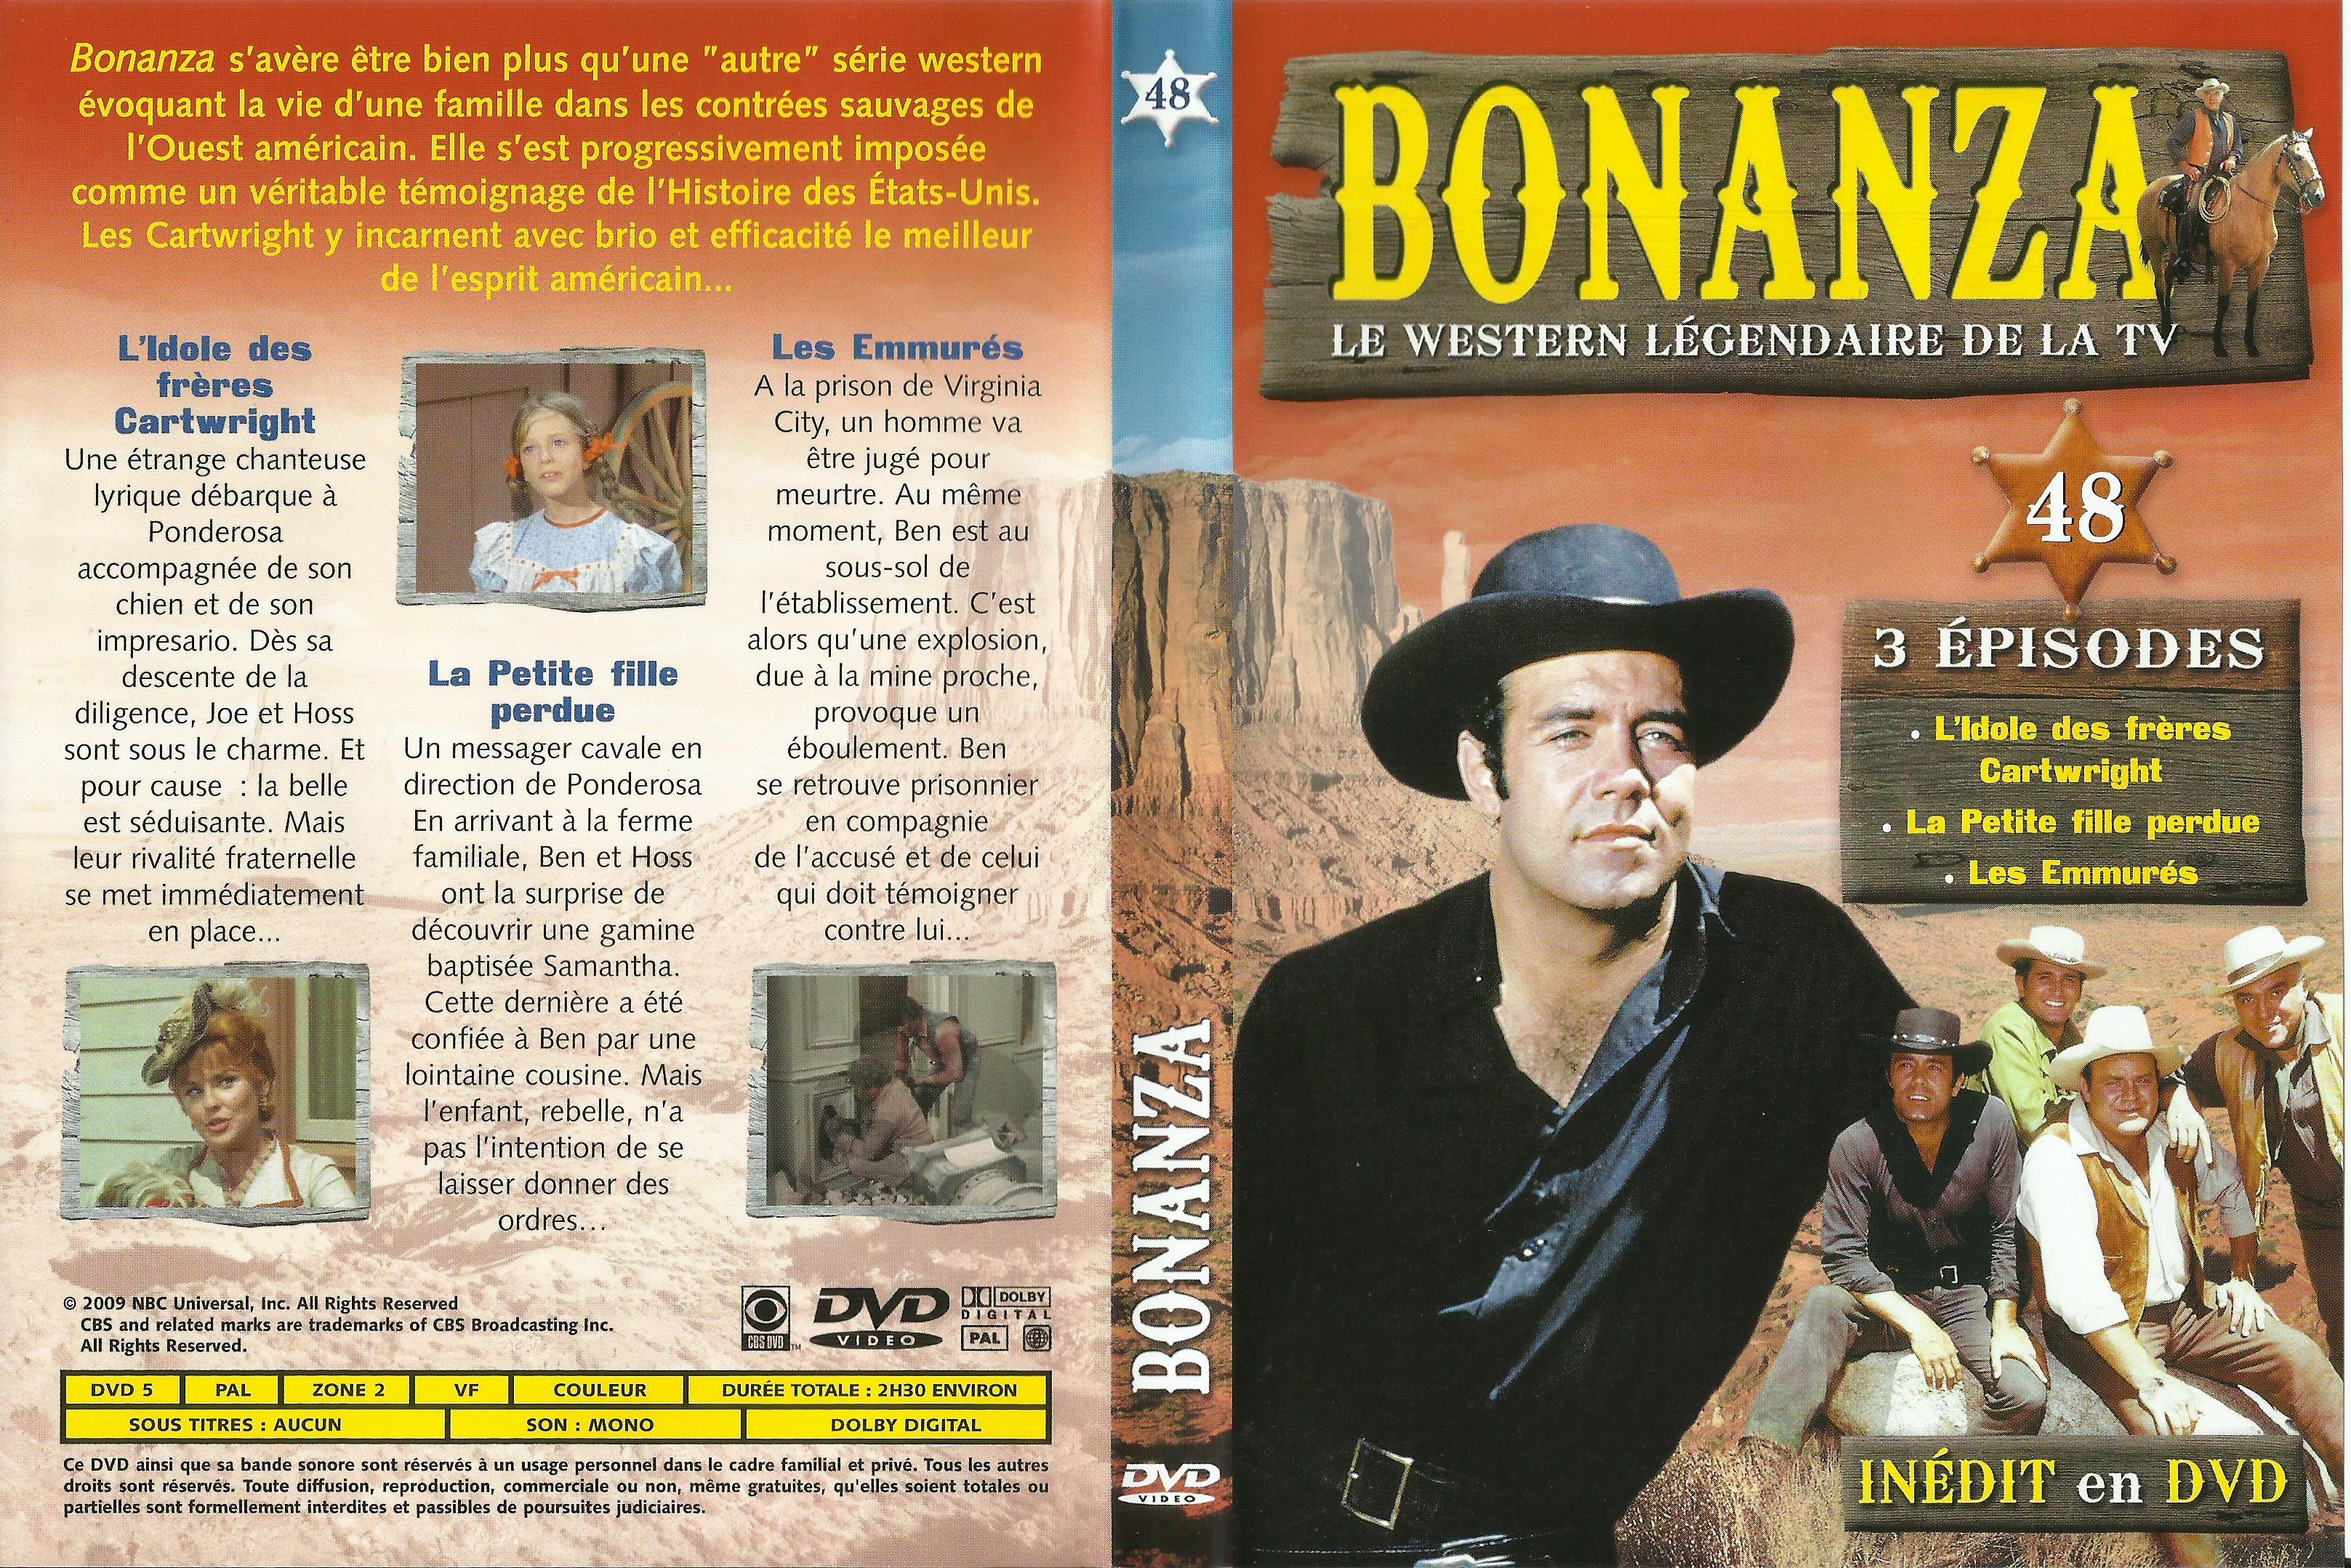 Jaquette DVD Bonanza vol 48